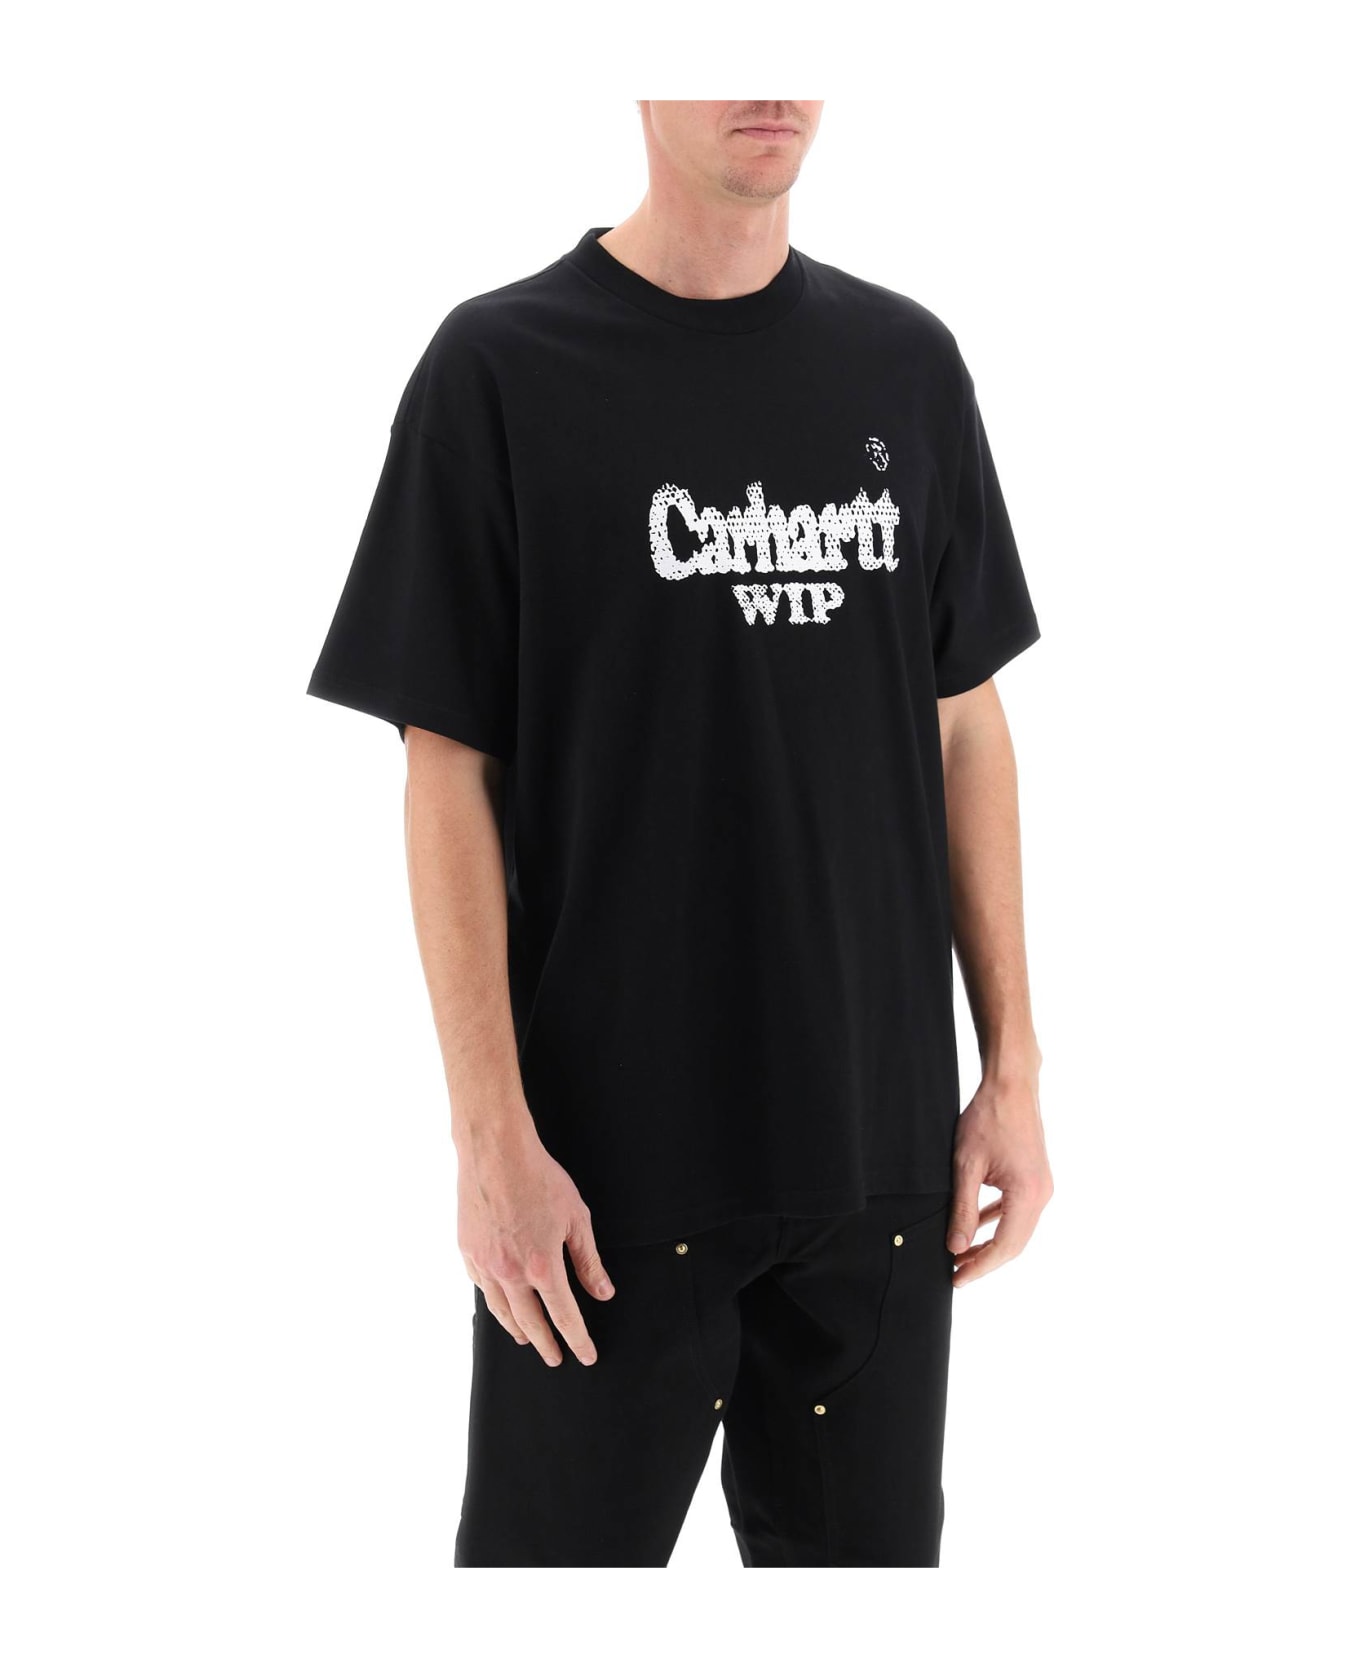 Carhartt Spree Halftone Printed T-shirt - BLACK WHITE (Black)